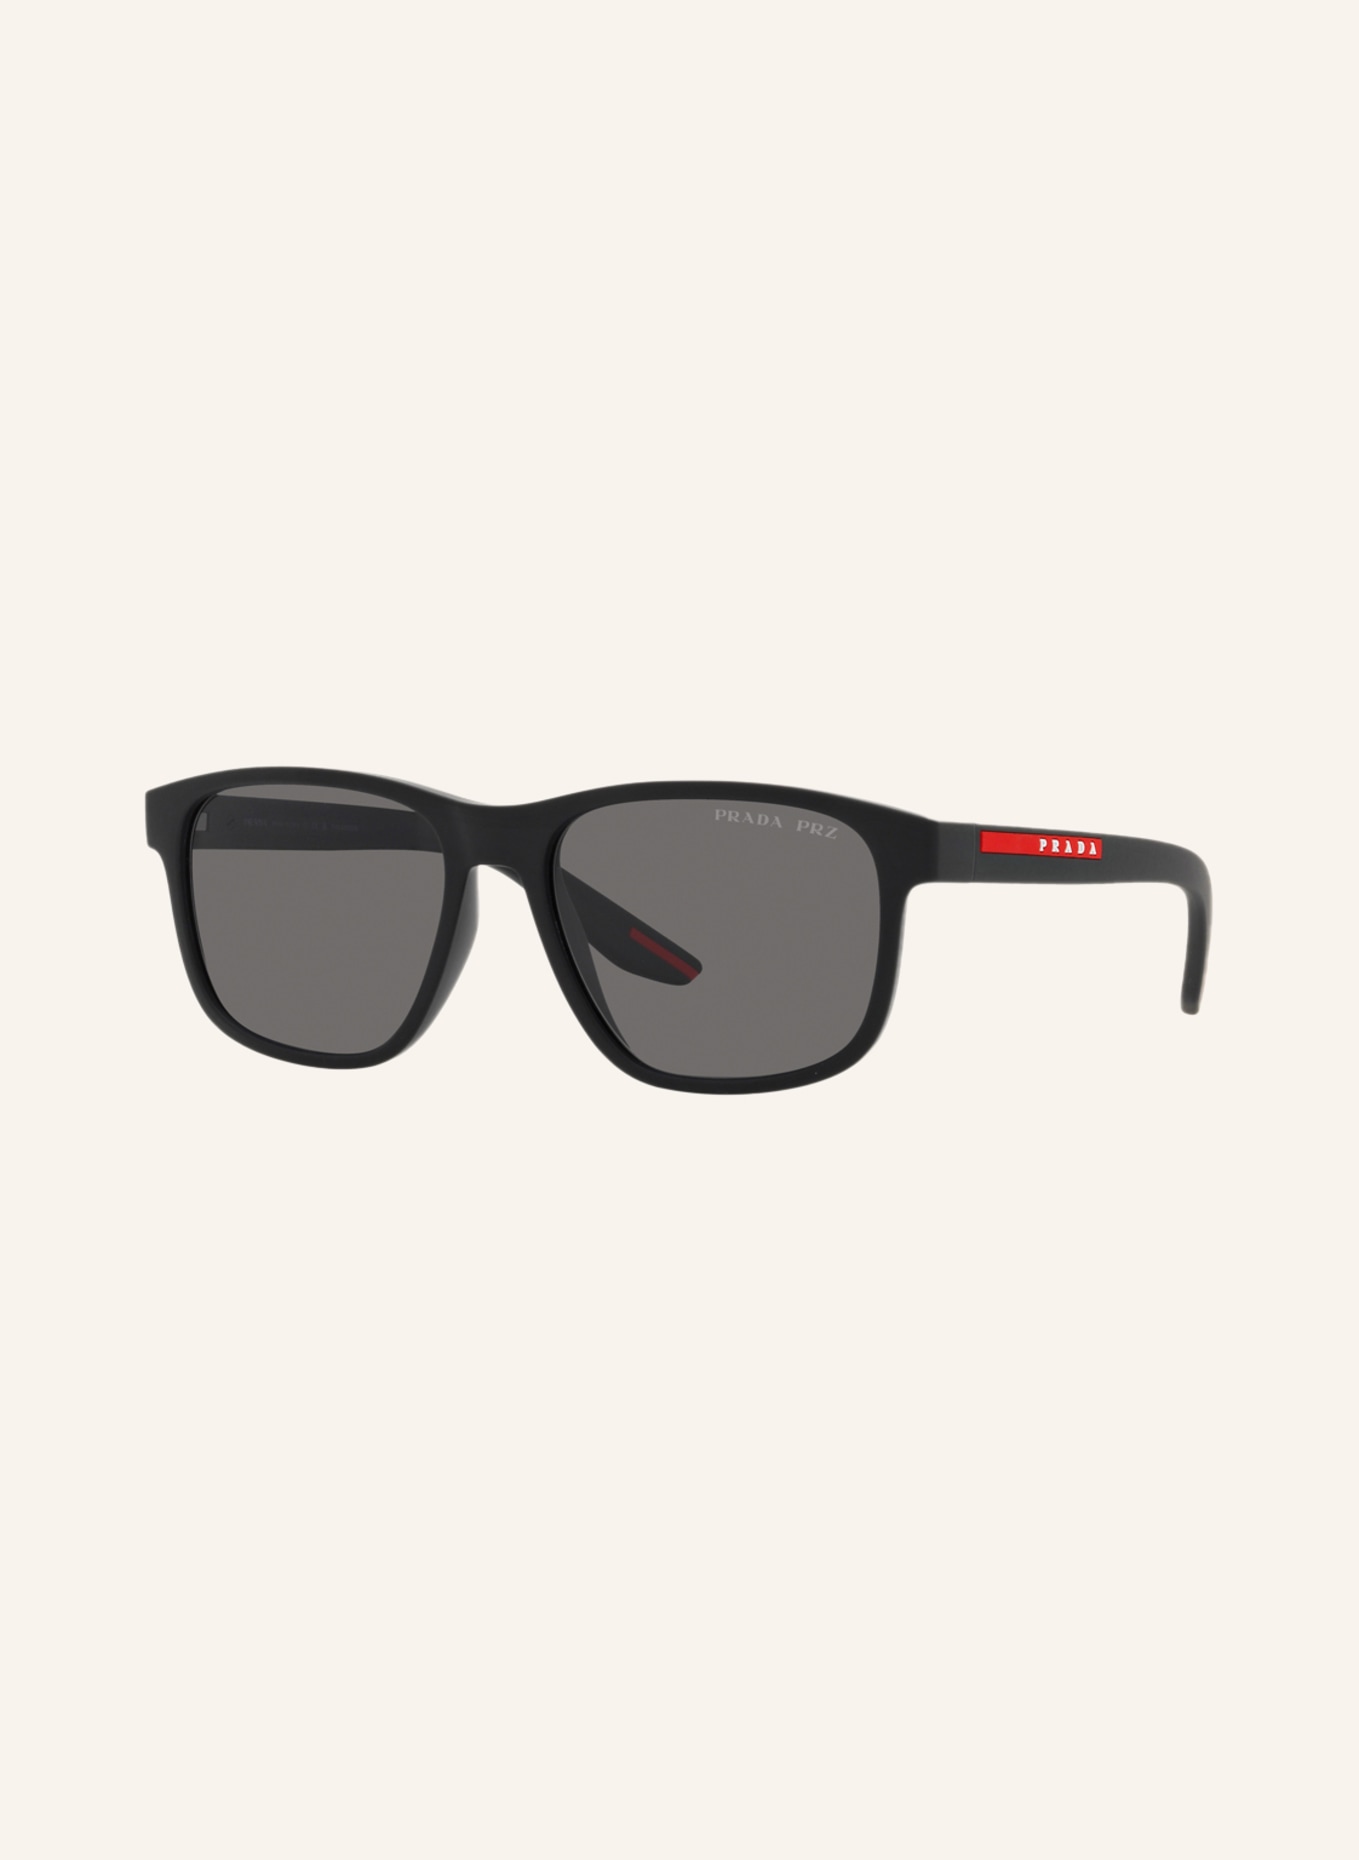 PRADA LINEA ROSSA Sunglasses PS 06YS, Color: DG002G - MATTE BLACK/ GRAY POLARIZED (Image 1)